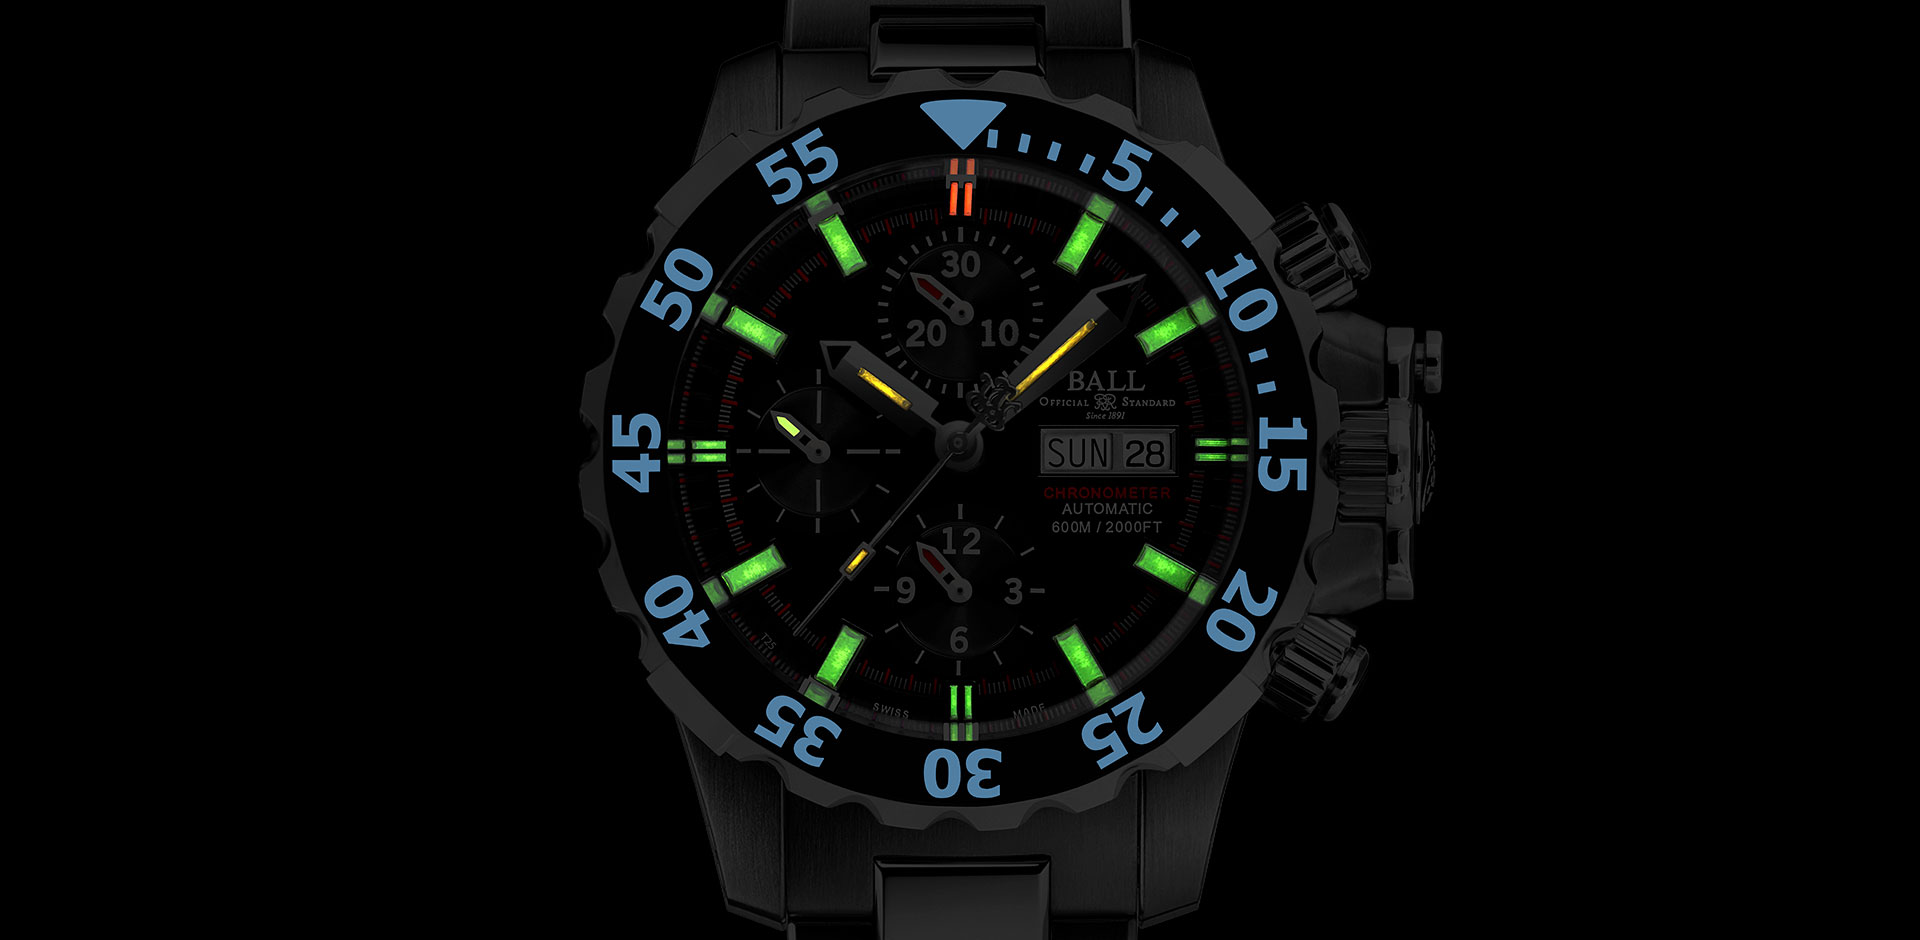 How To Spot A Replica Breitling Watch